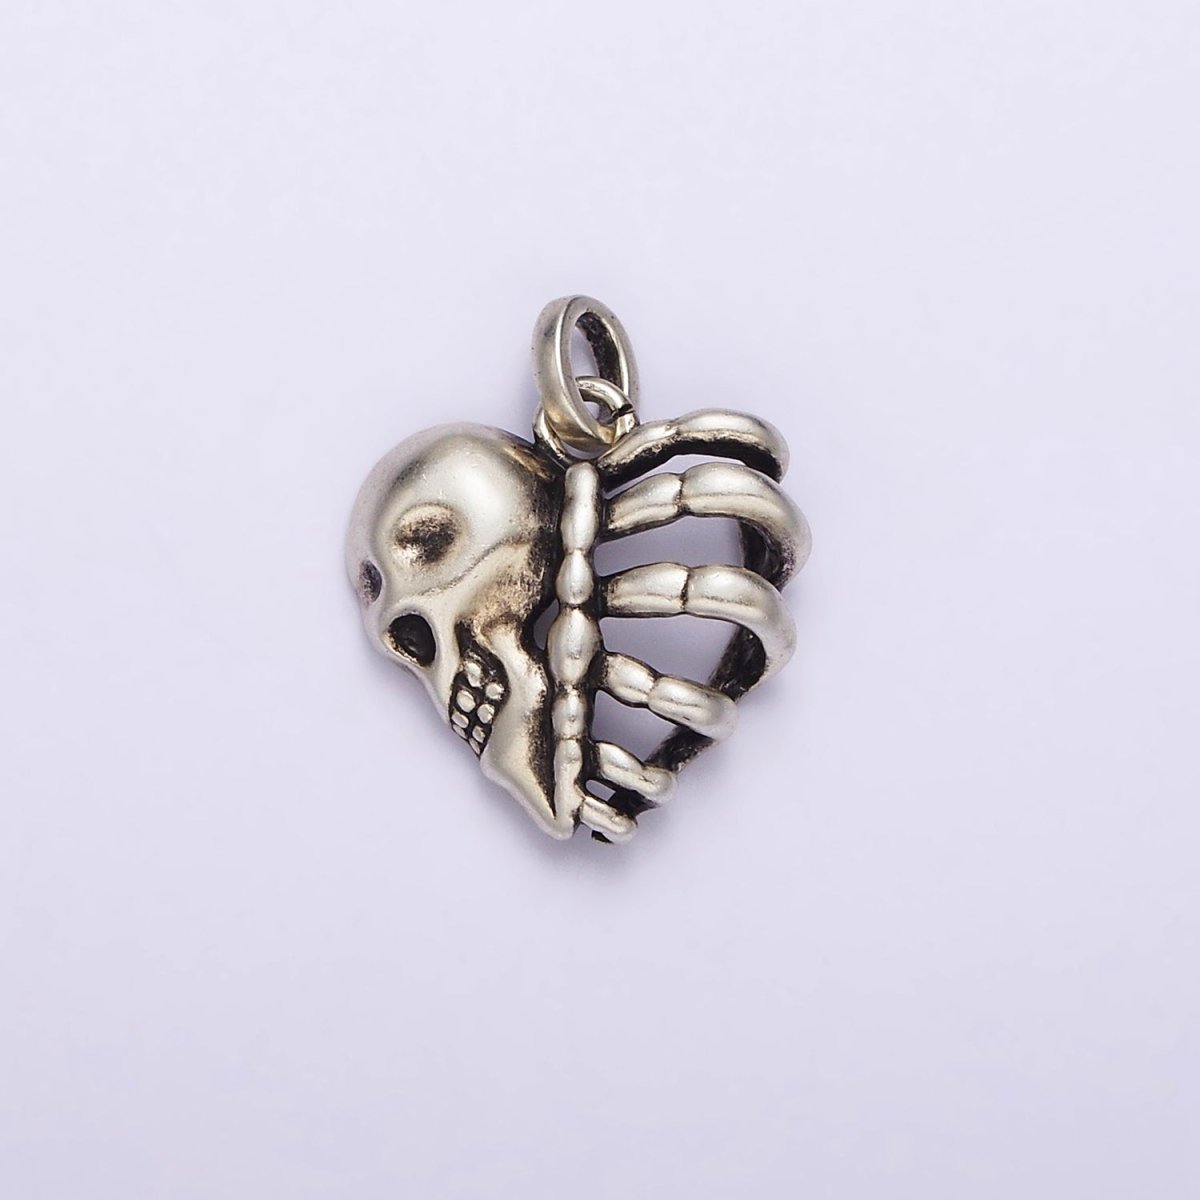 Dainty Skull Heart Charm in 925 Sterling Silver Pendant Halloween Pendant SL-325 - DLUXCA